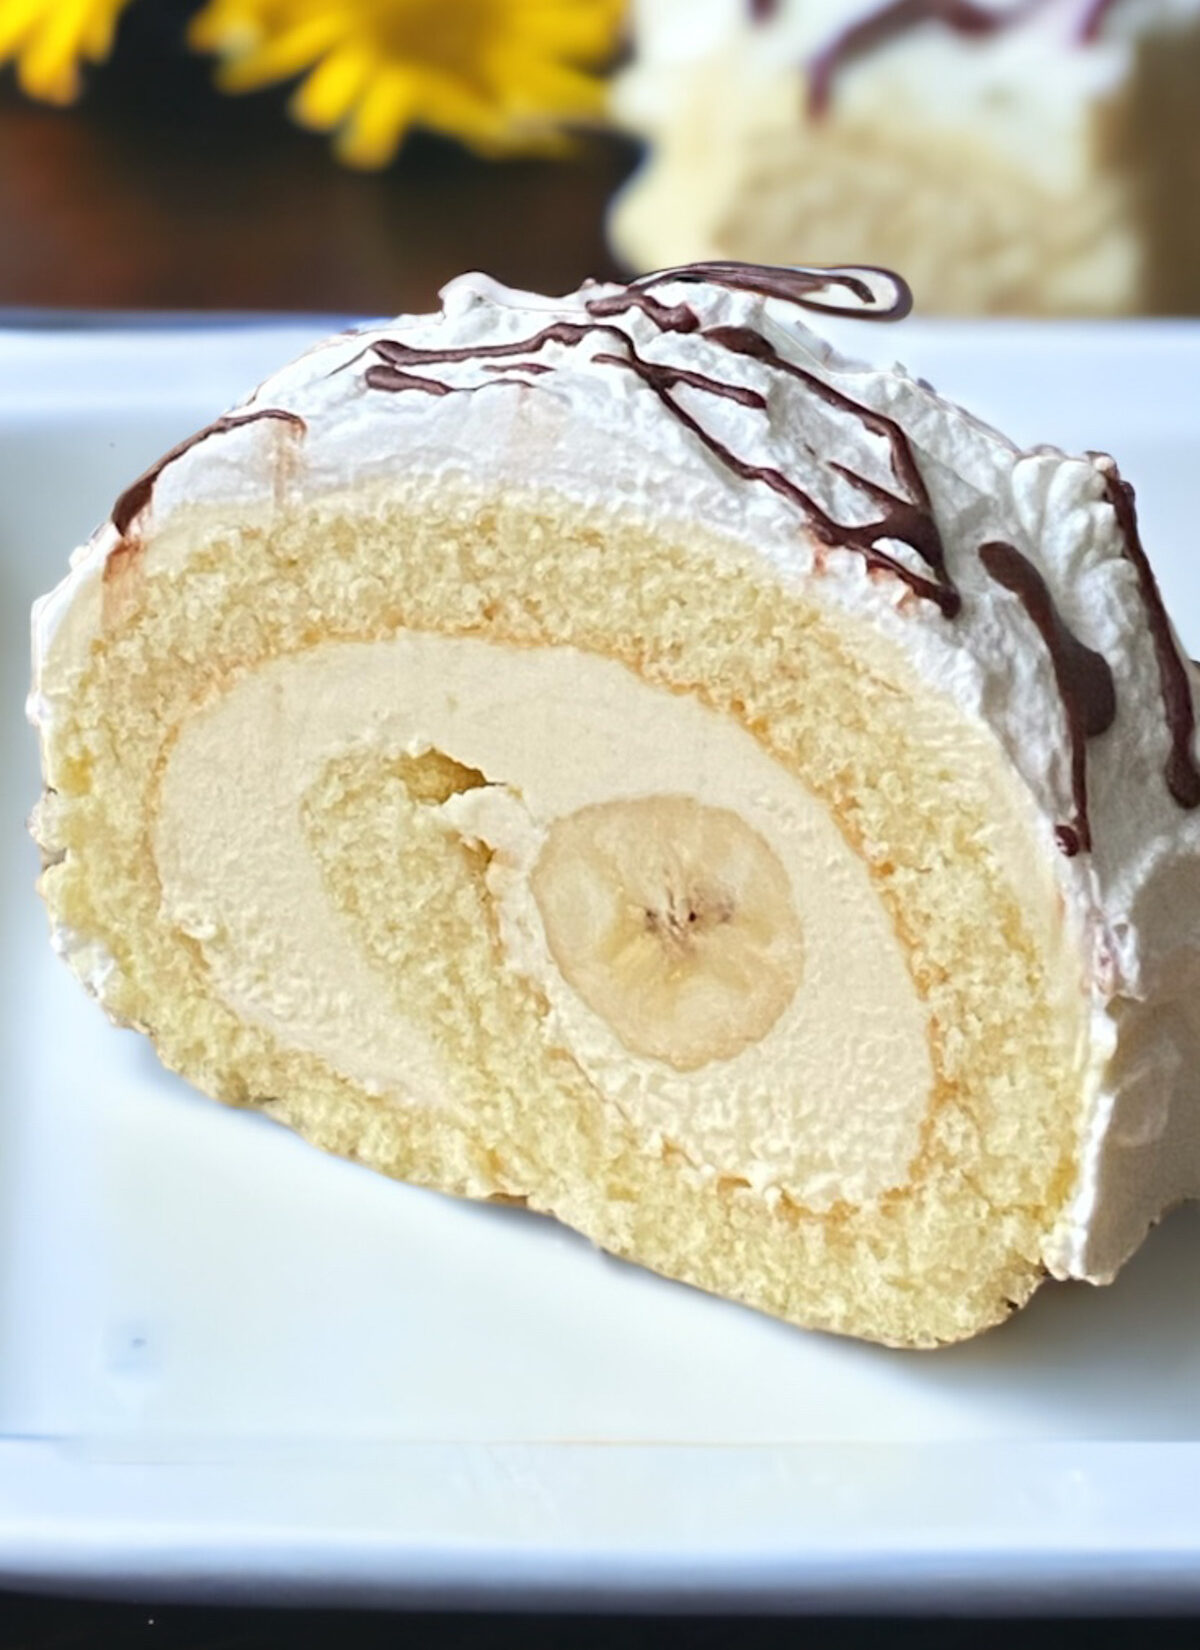 Jumbo Size Cake Roll with Bananas